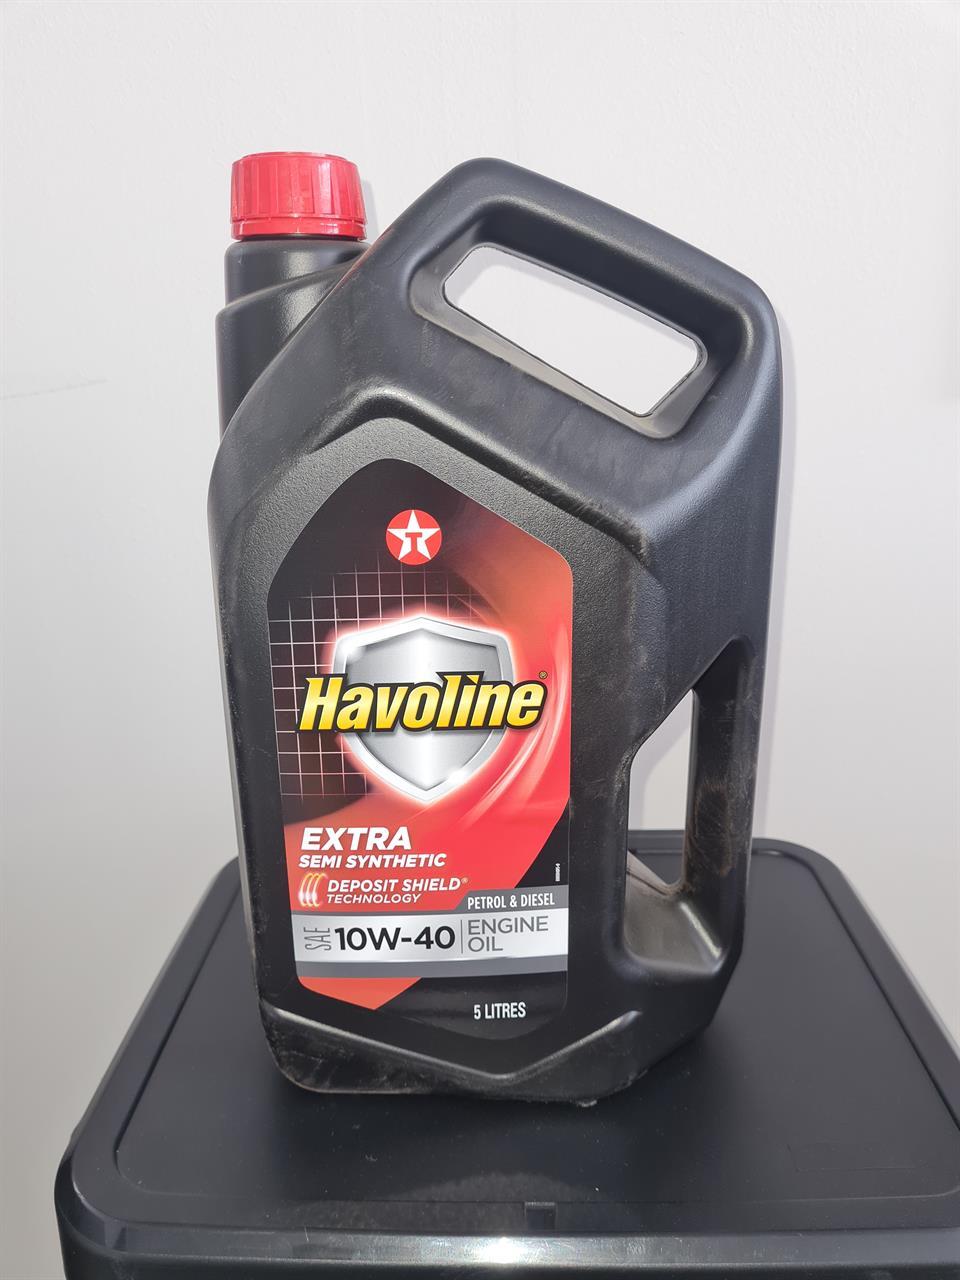 Havoline Extra semi synthetic 10w-40 5L